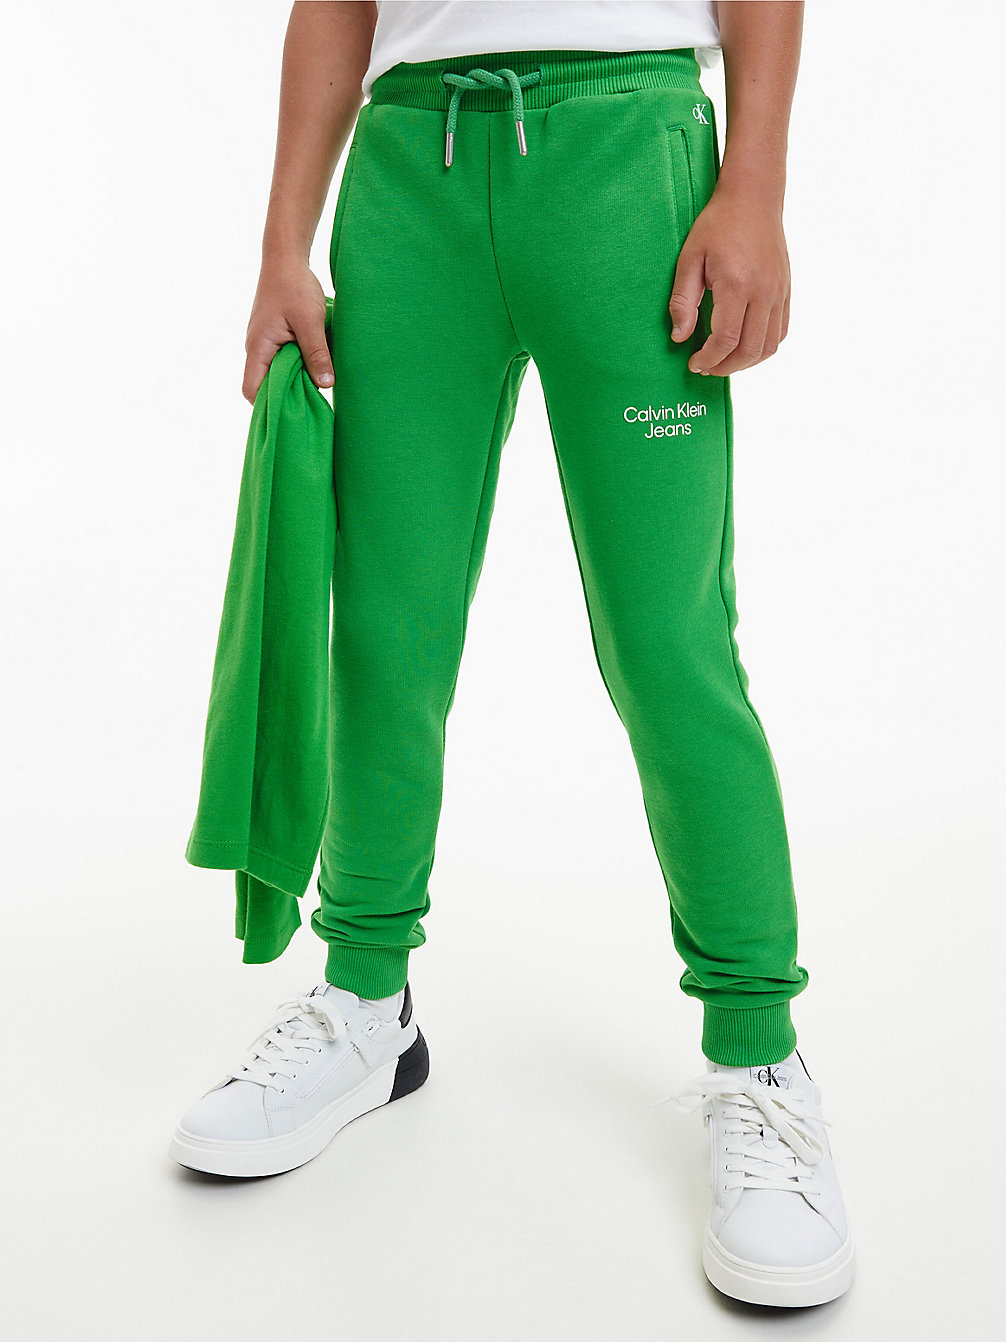 GALVANIC GREEN Organic Cotton Joggers undefined boys Calvin Klein